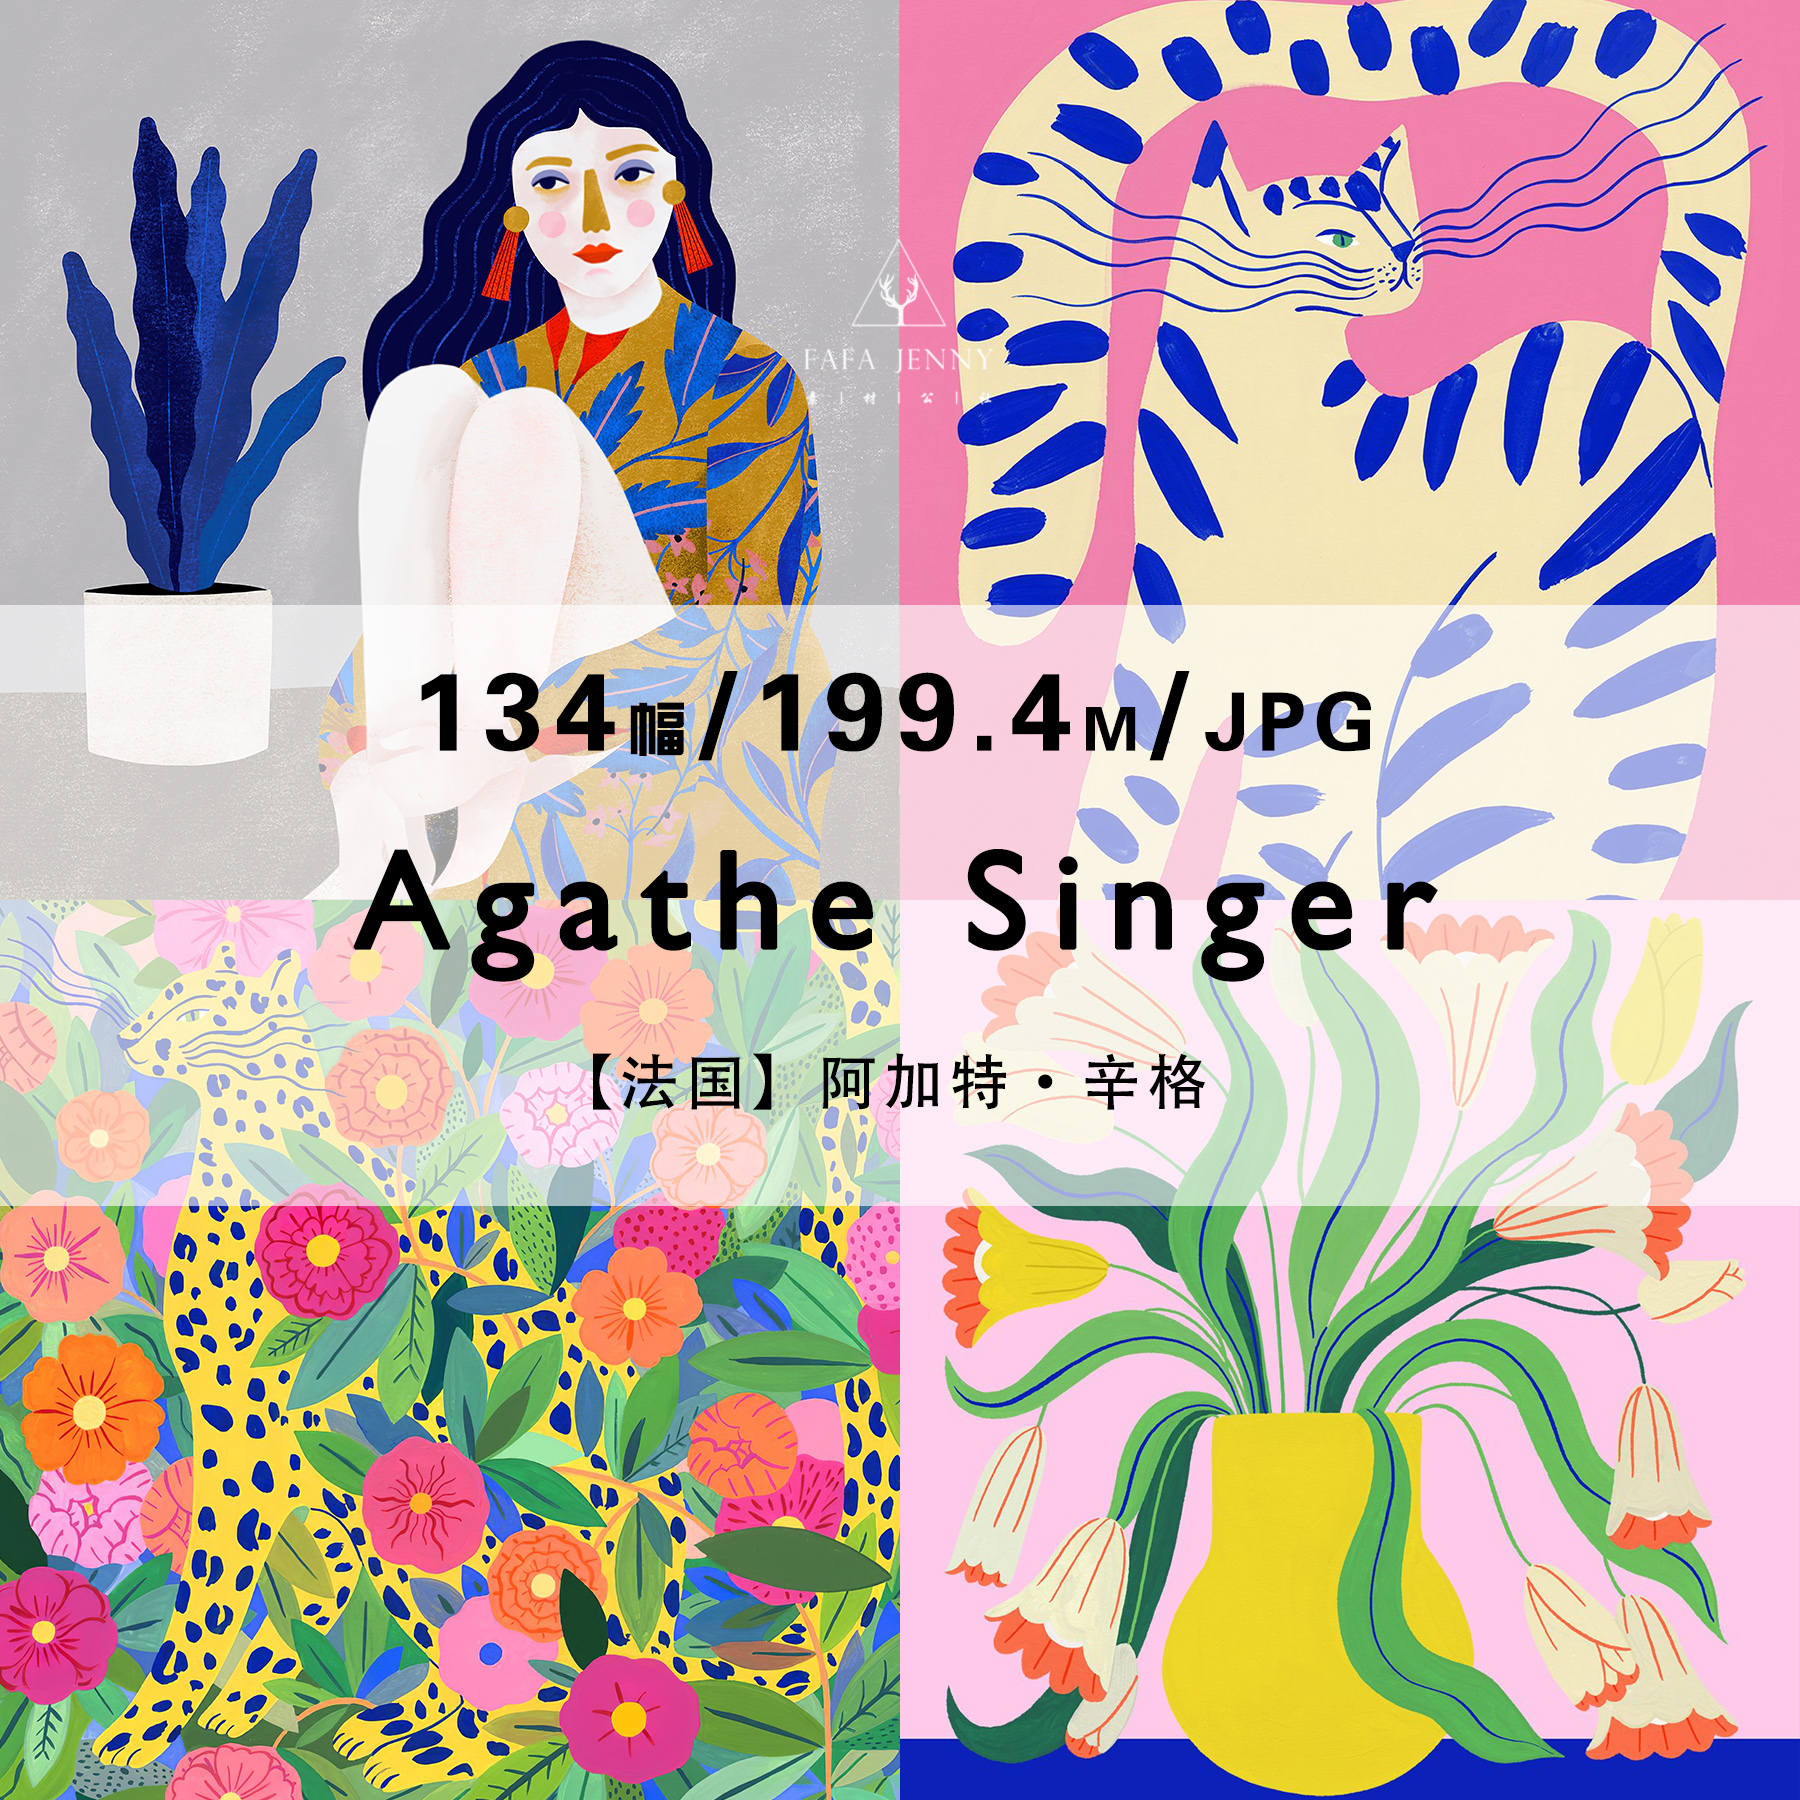 Agathe Singer法国扁平插画师绘画作品合集电子图片素材临摹资料